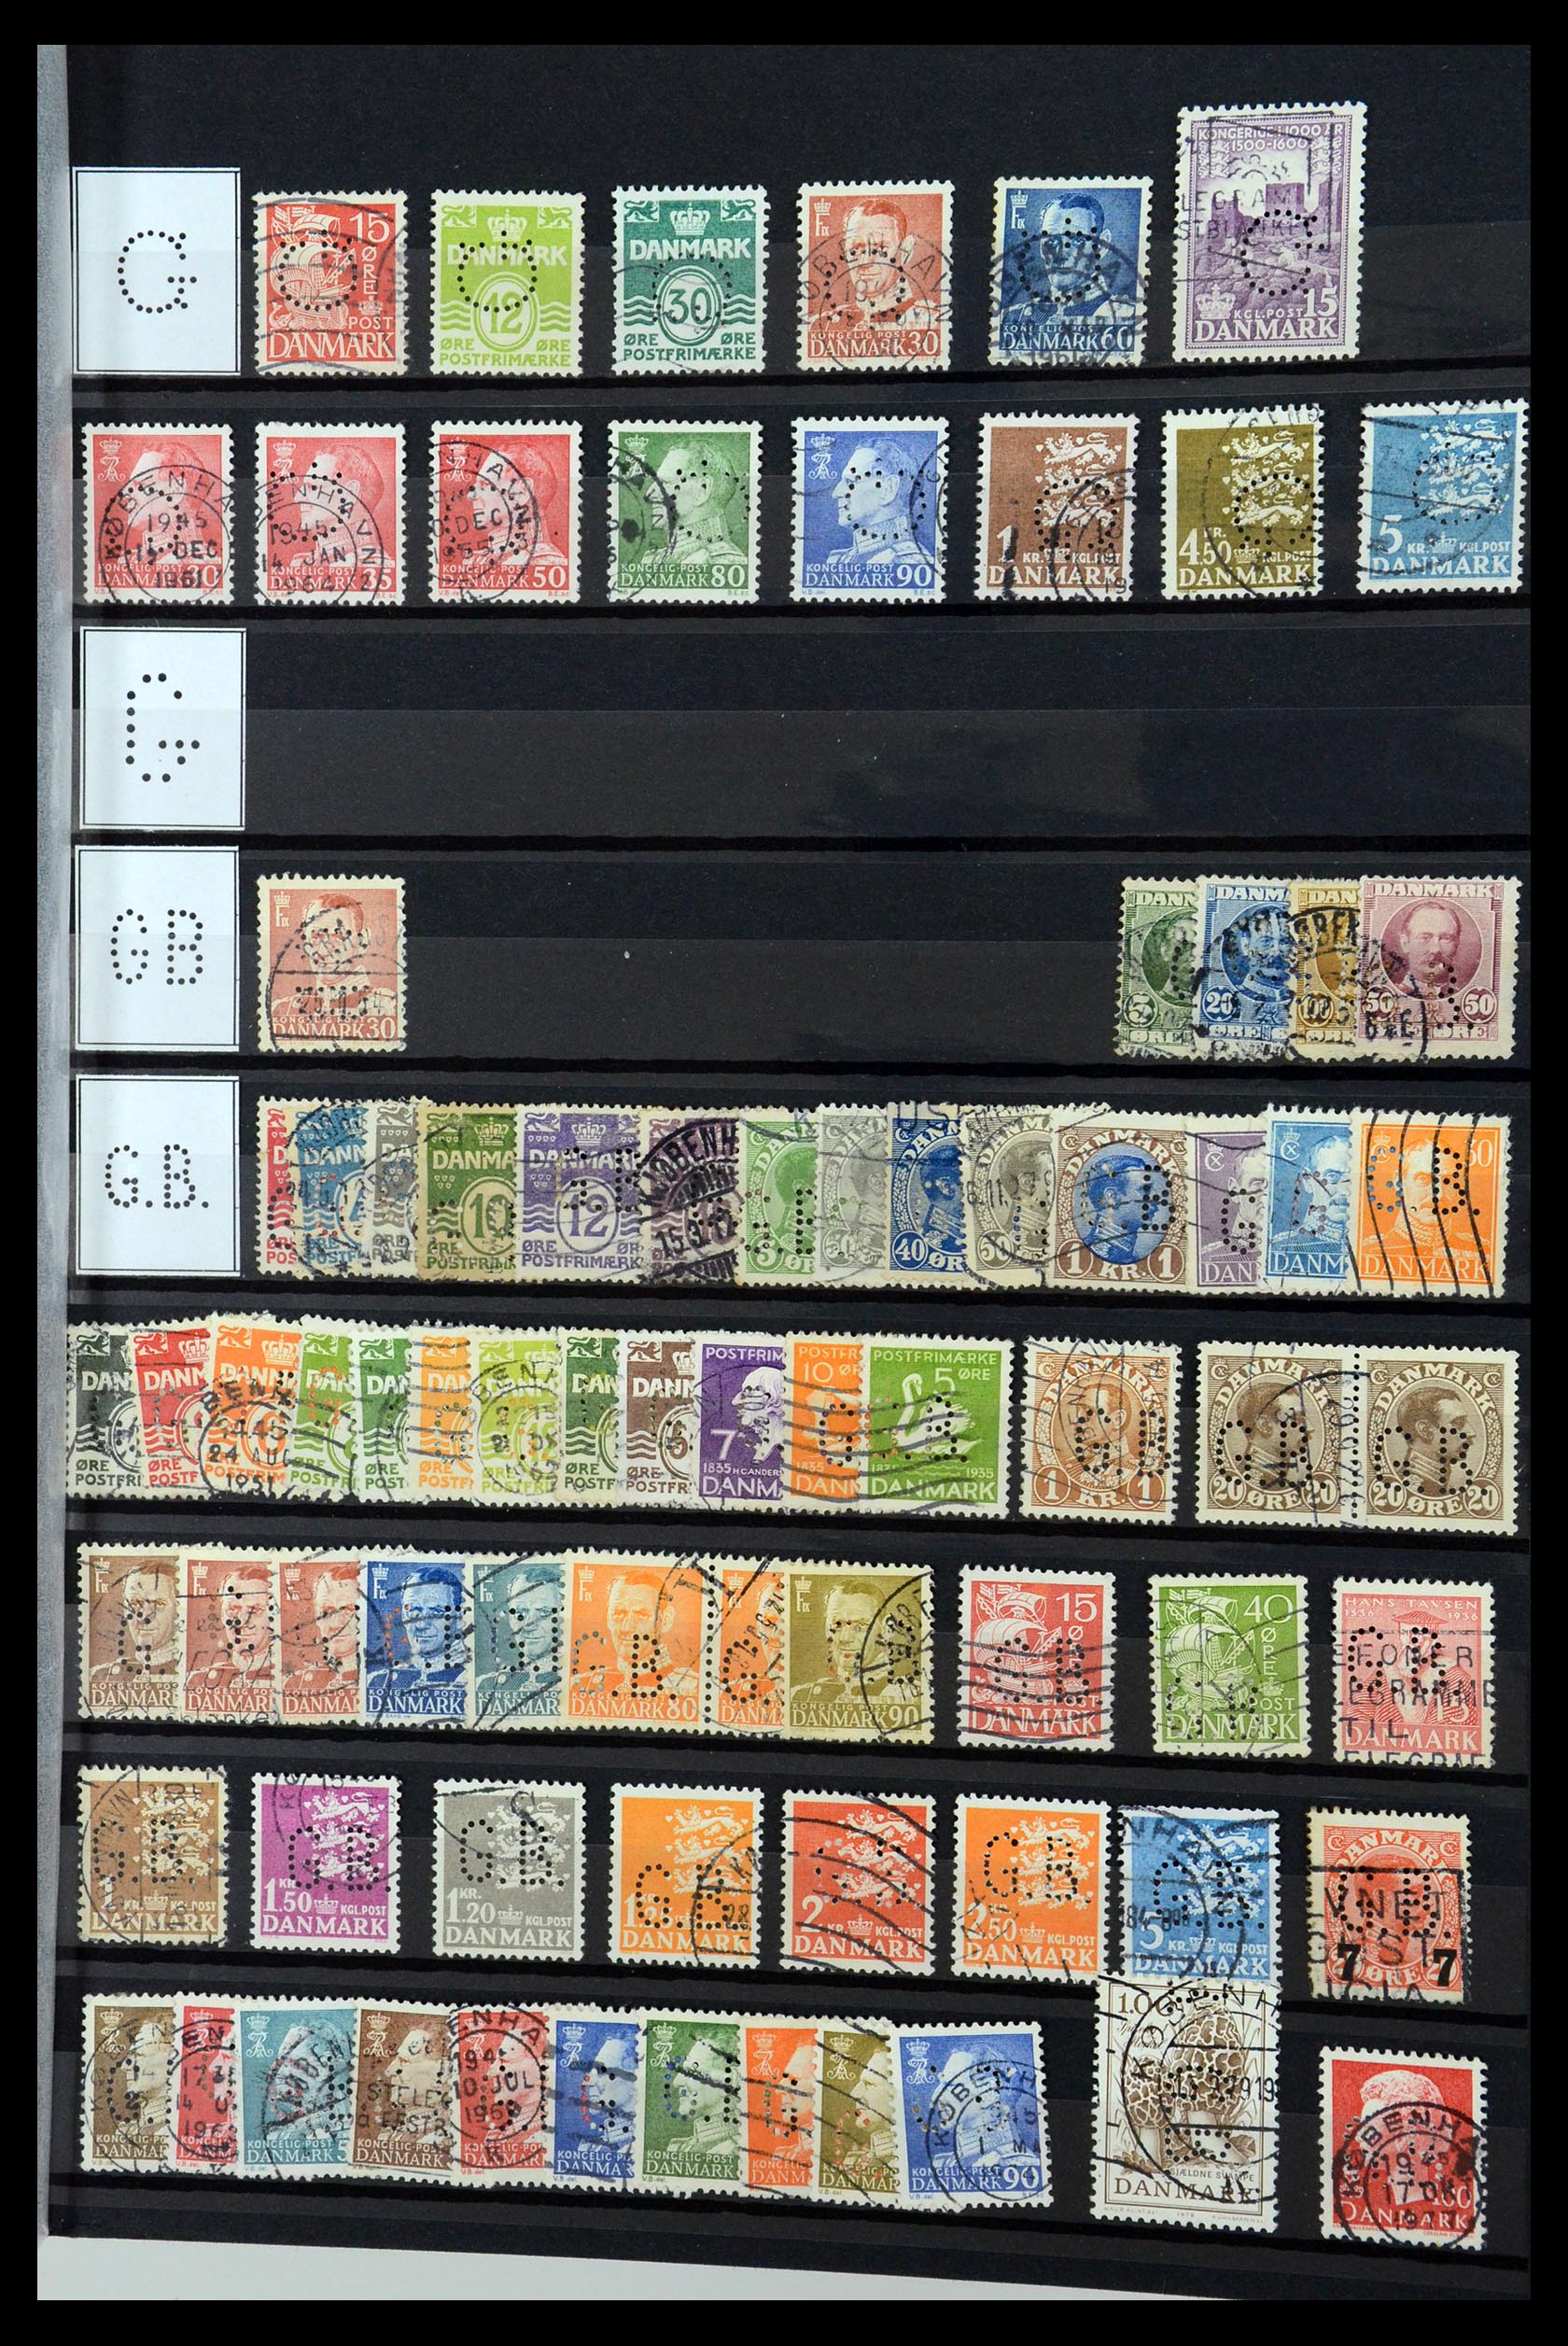 36396 058 - Stamp collection 36396 Denmark perfins.